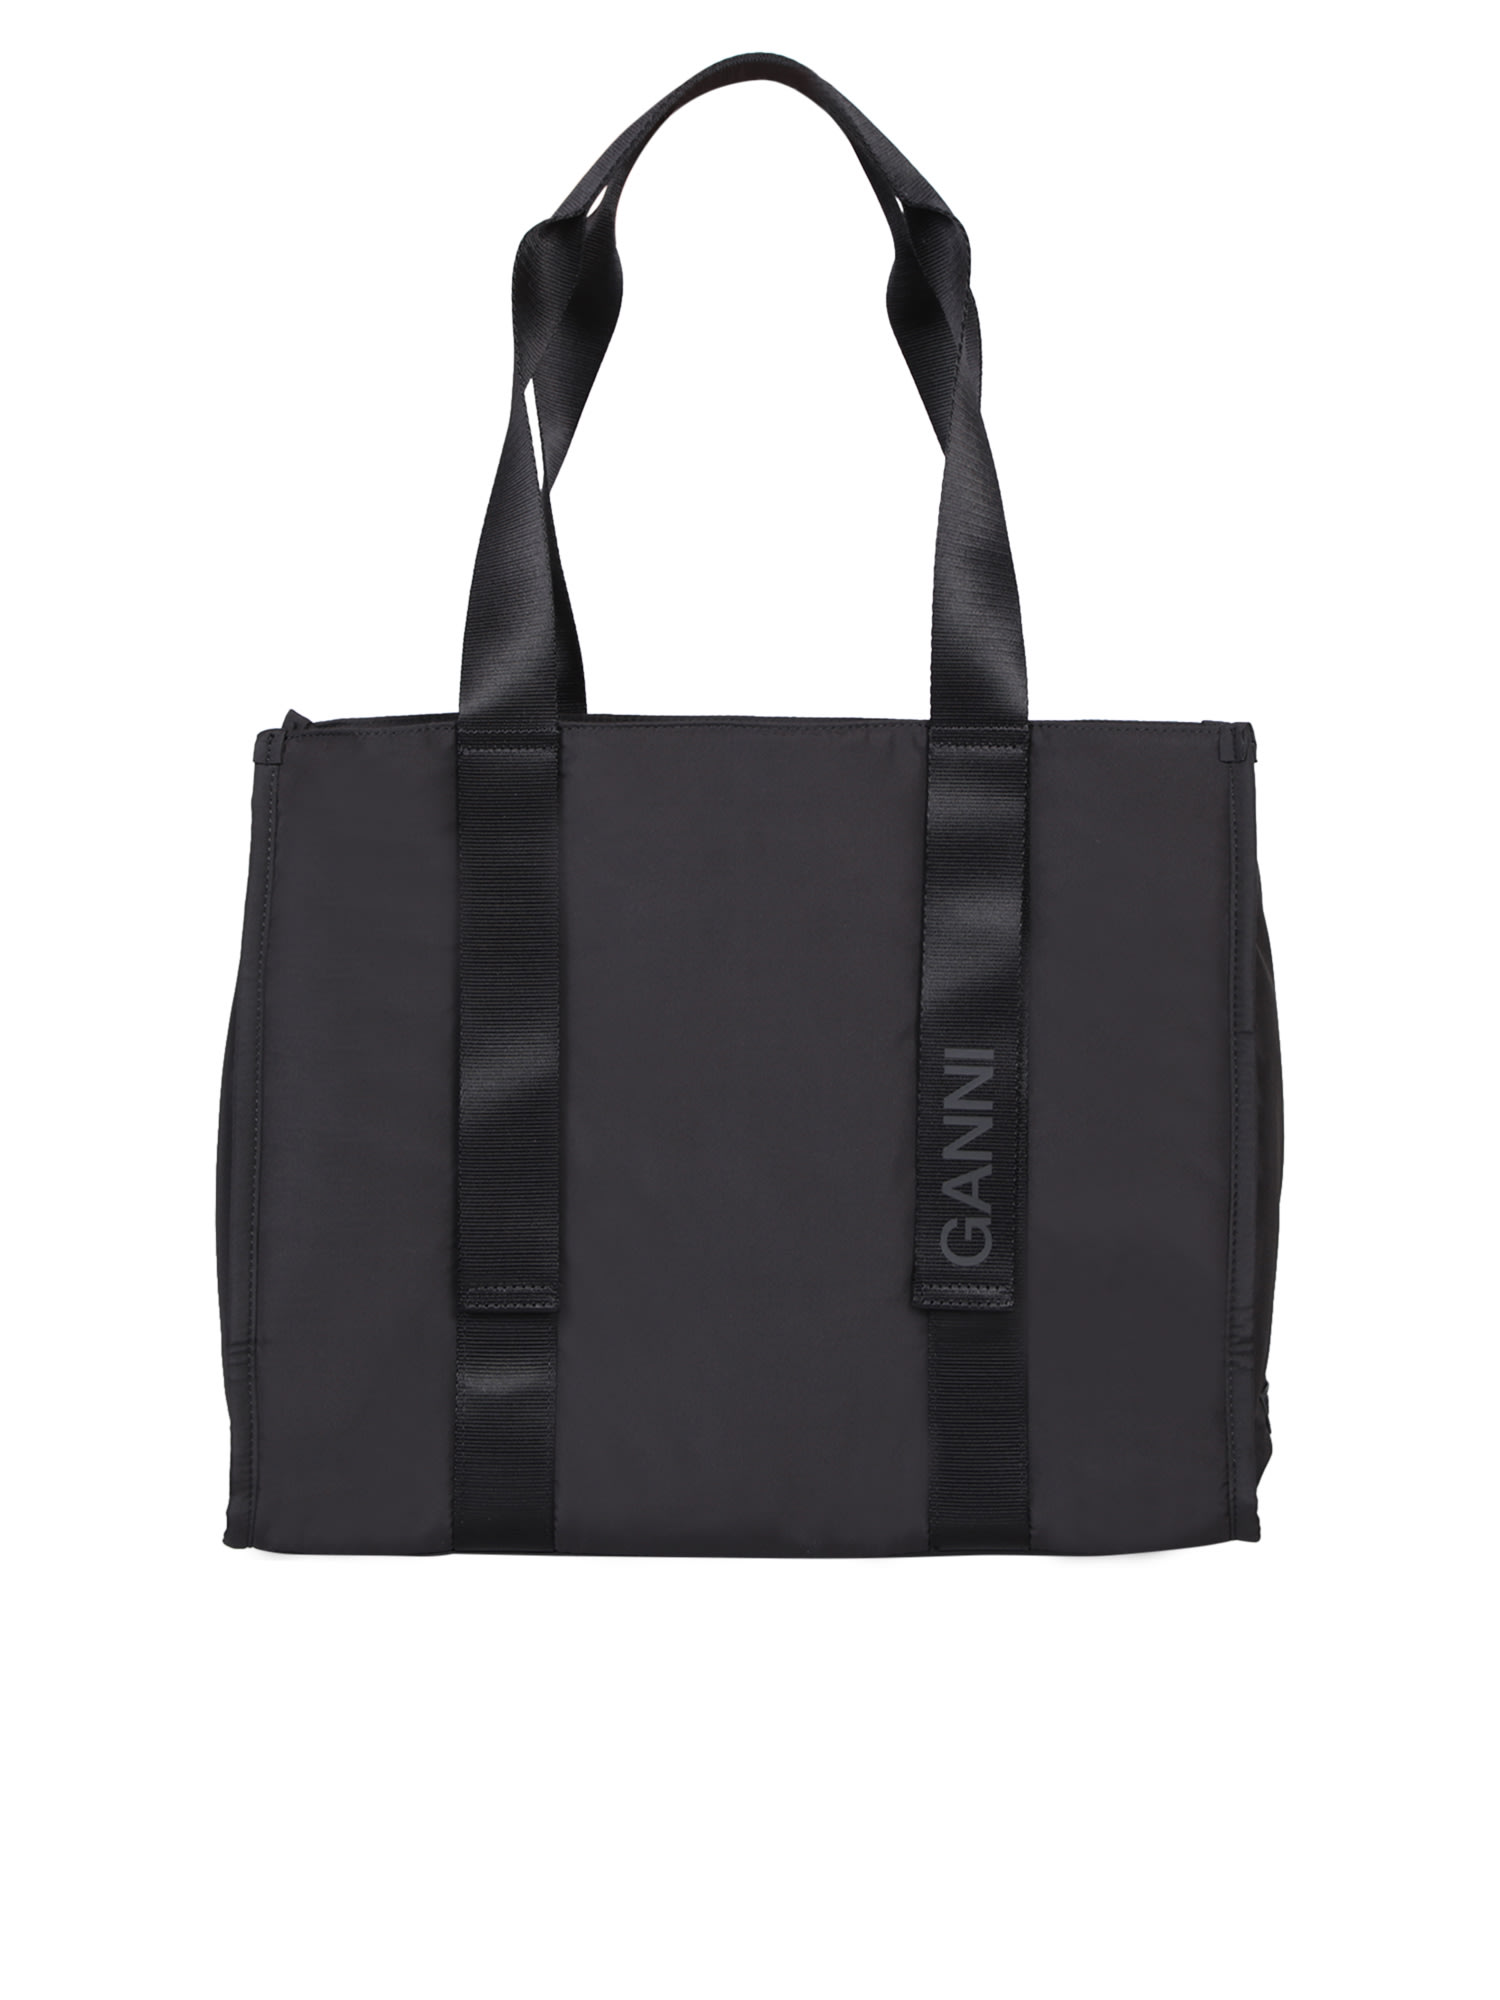 Medium Black Tote Bag